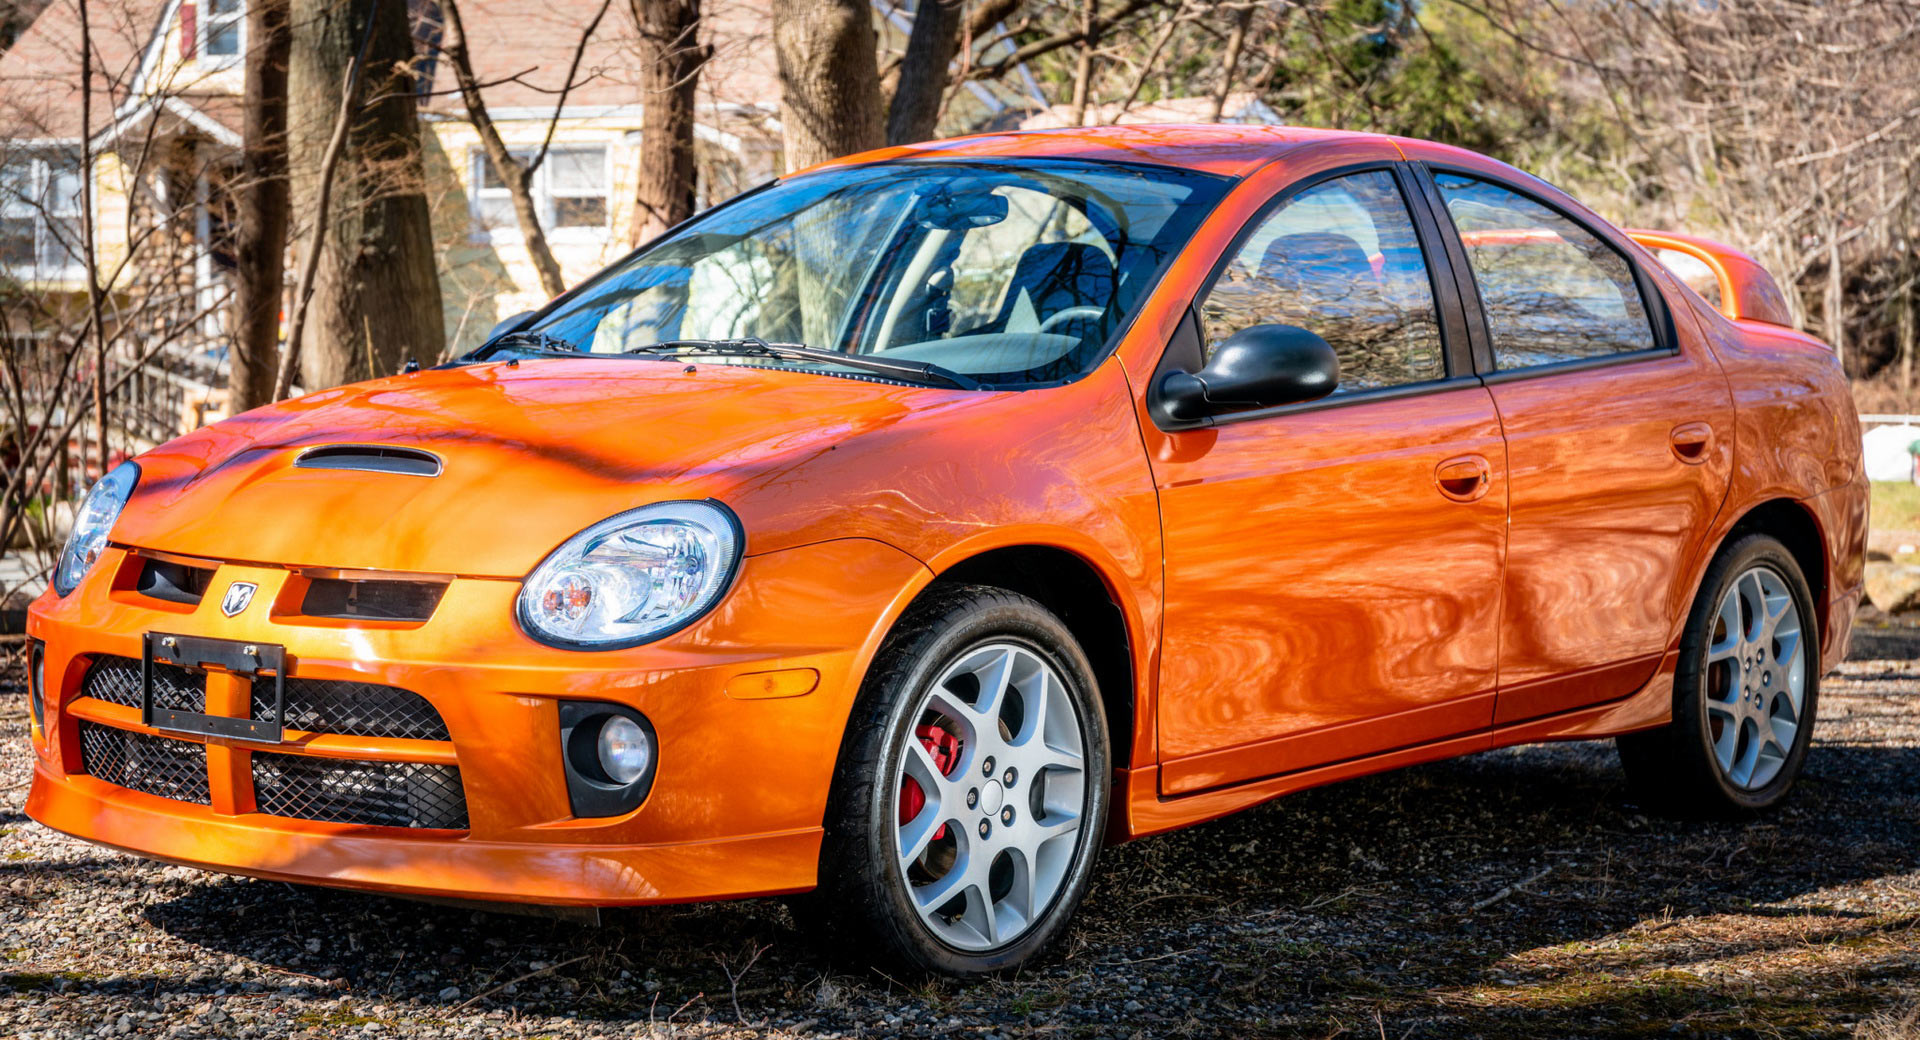 2005 Dodge Neon SRT-4 Has Just 2,900 Miles, Rare Orange Blast Paint |  Carscoops